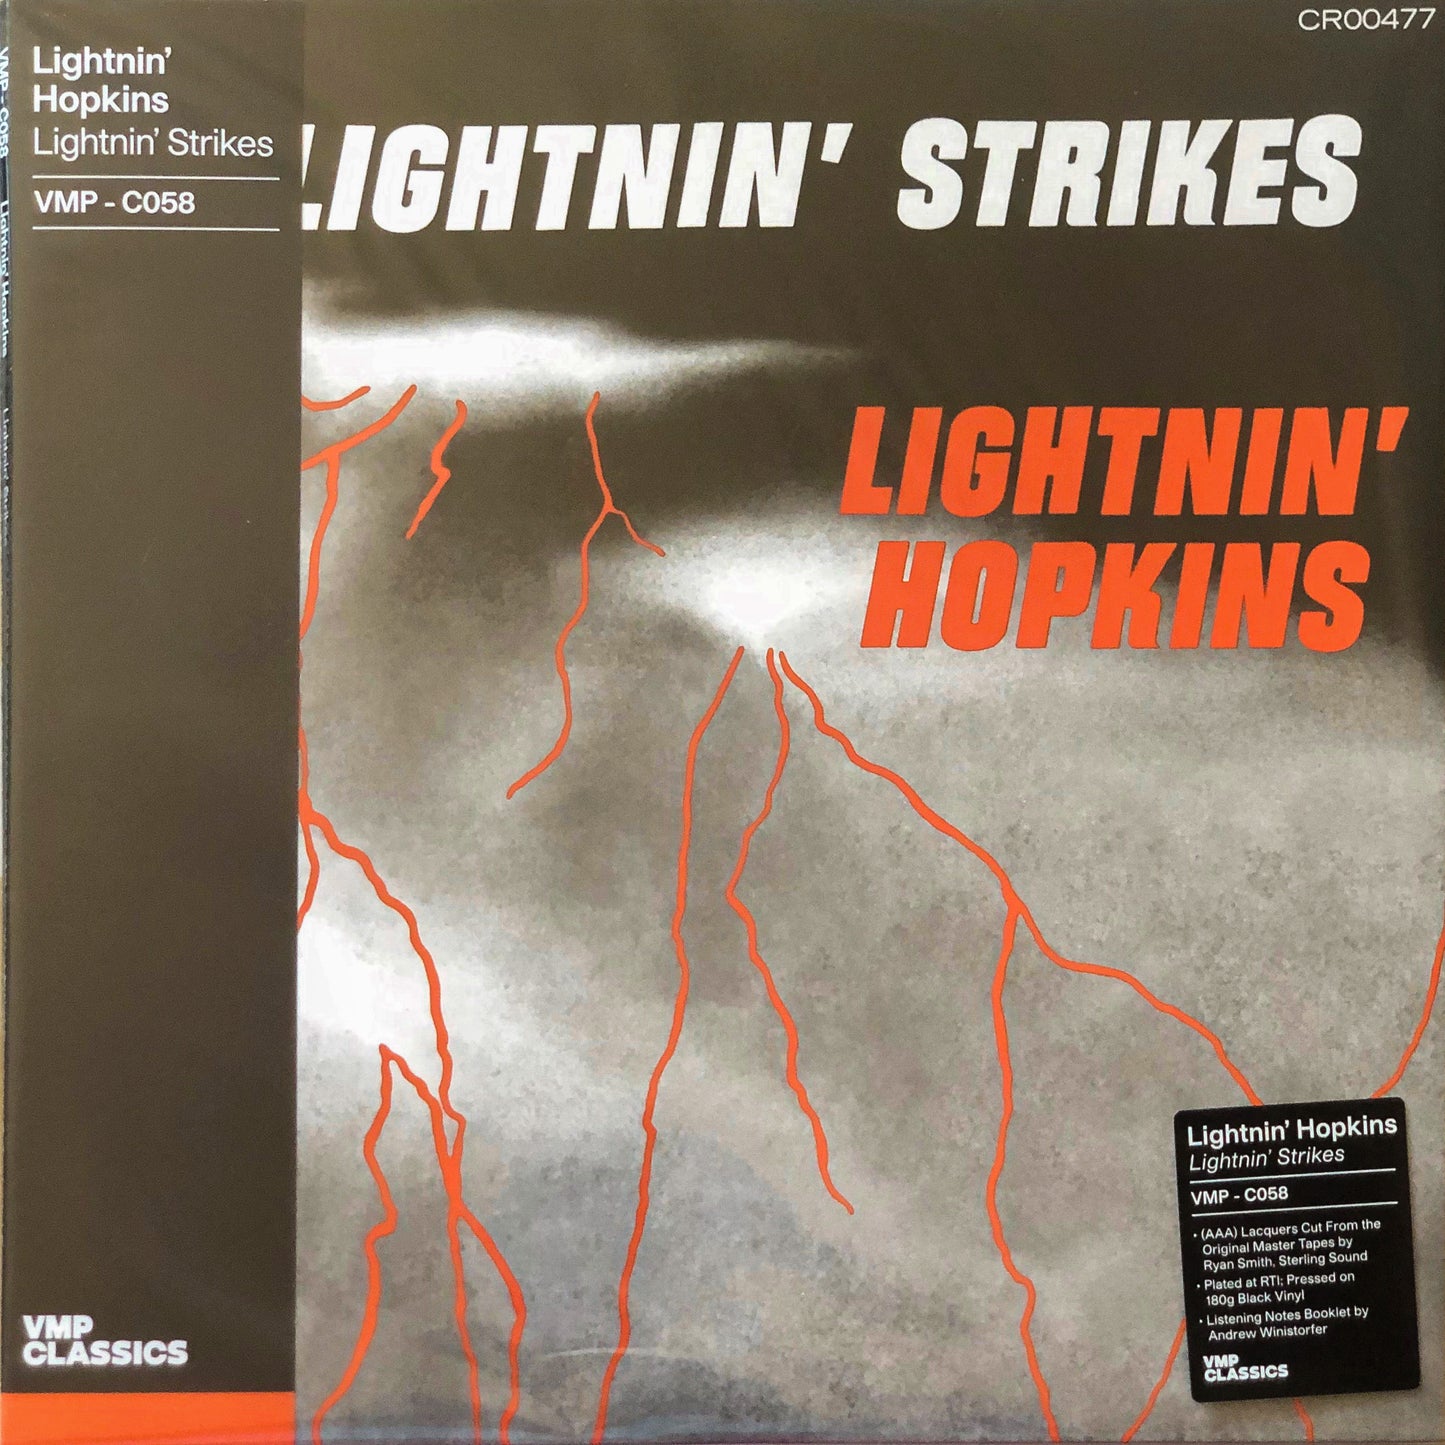 Lightnin' Strikes (VMP Classics Exclusive 180g Vinyl)